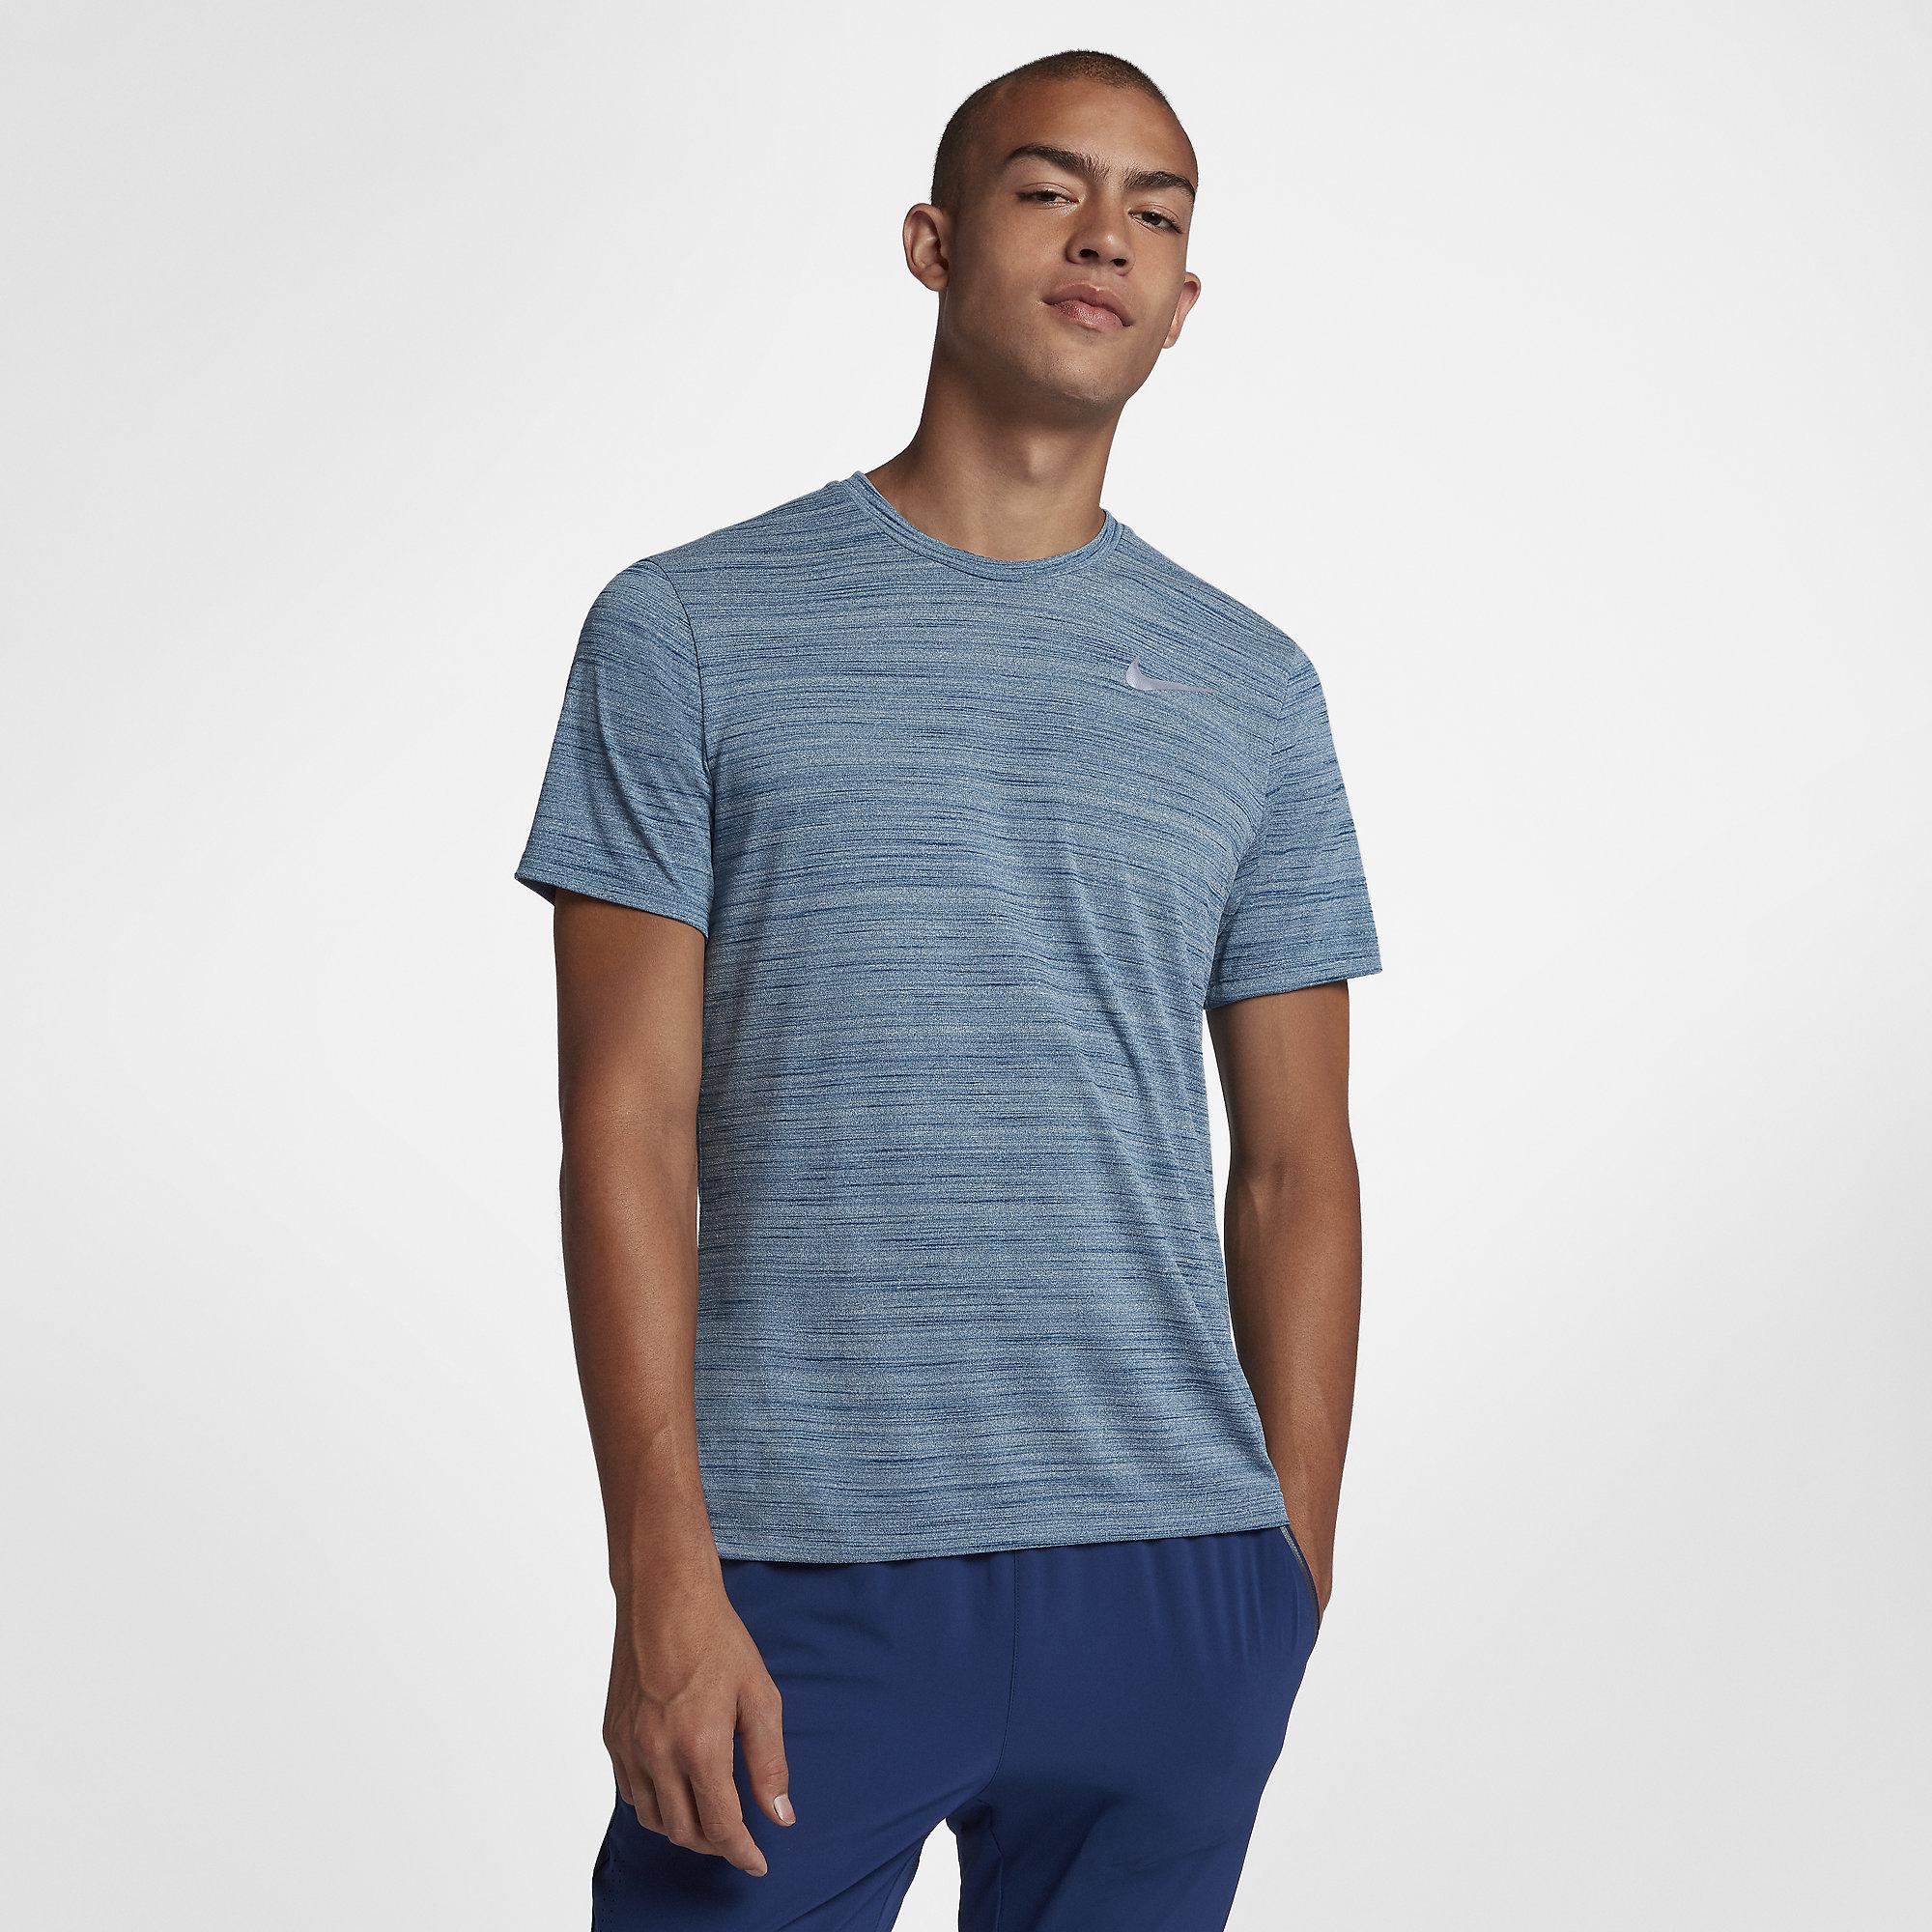 Nike Mens Miler Essential Top - Blue Force/Heather - Tennisnuts.com